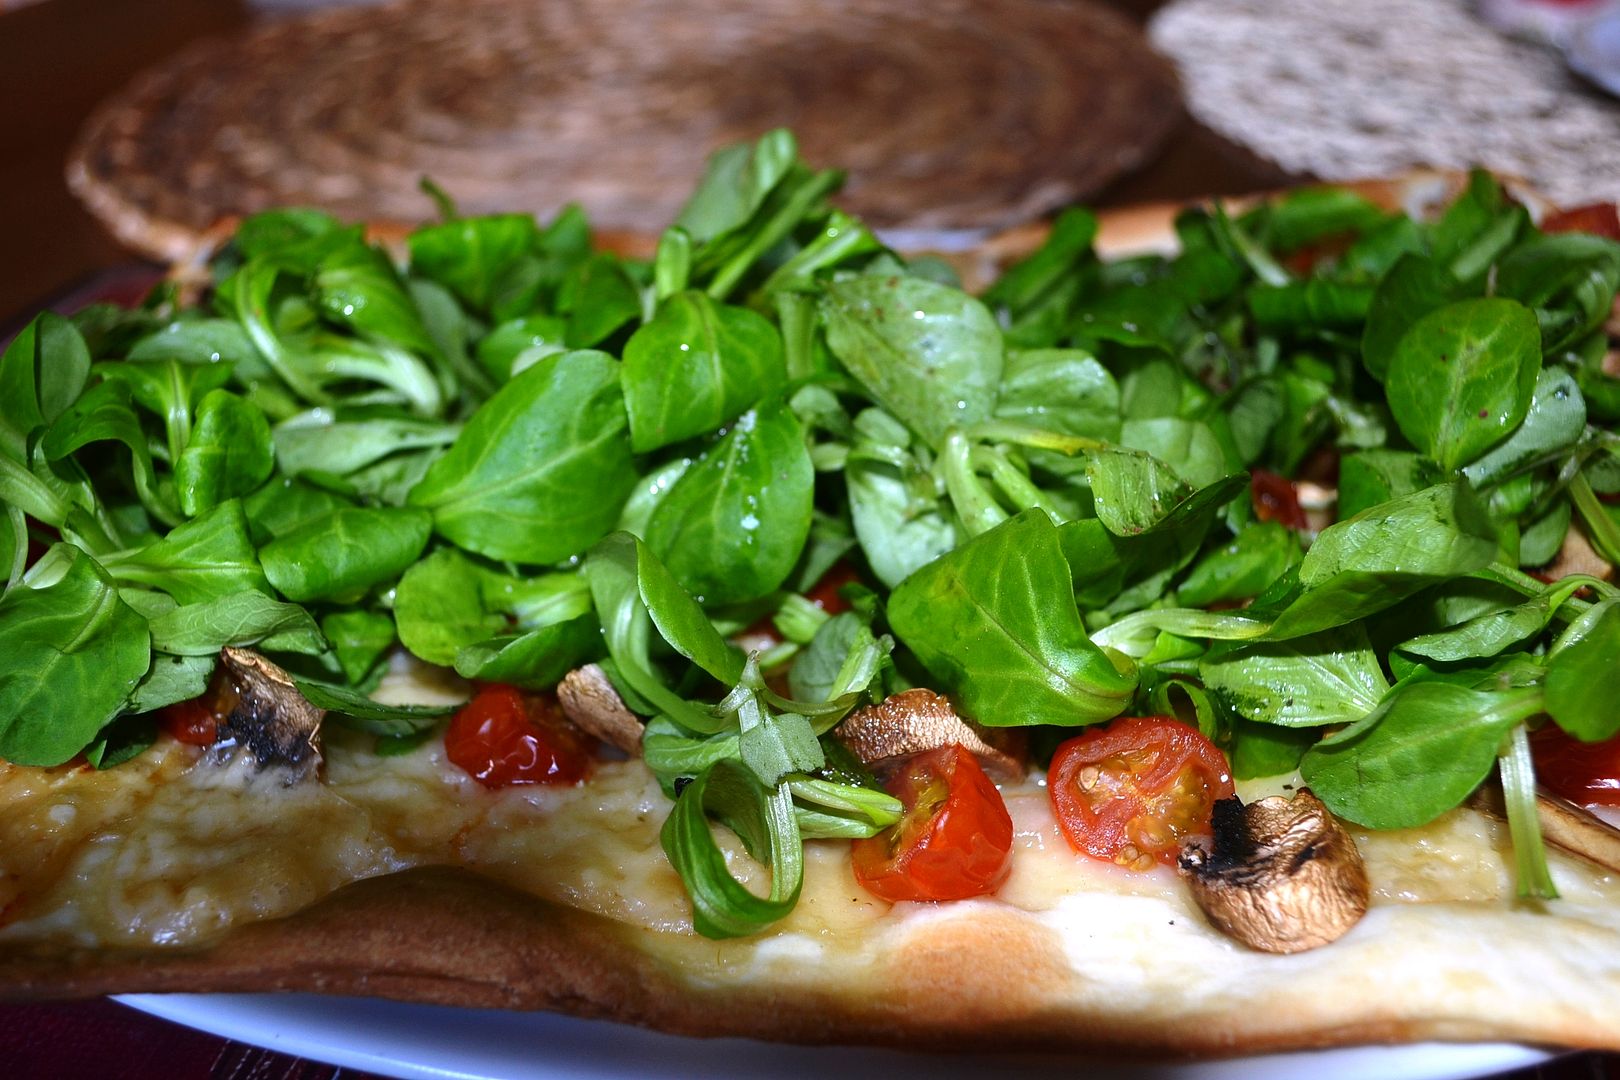  Foto de pizza con masa Buttoni y verdura 